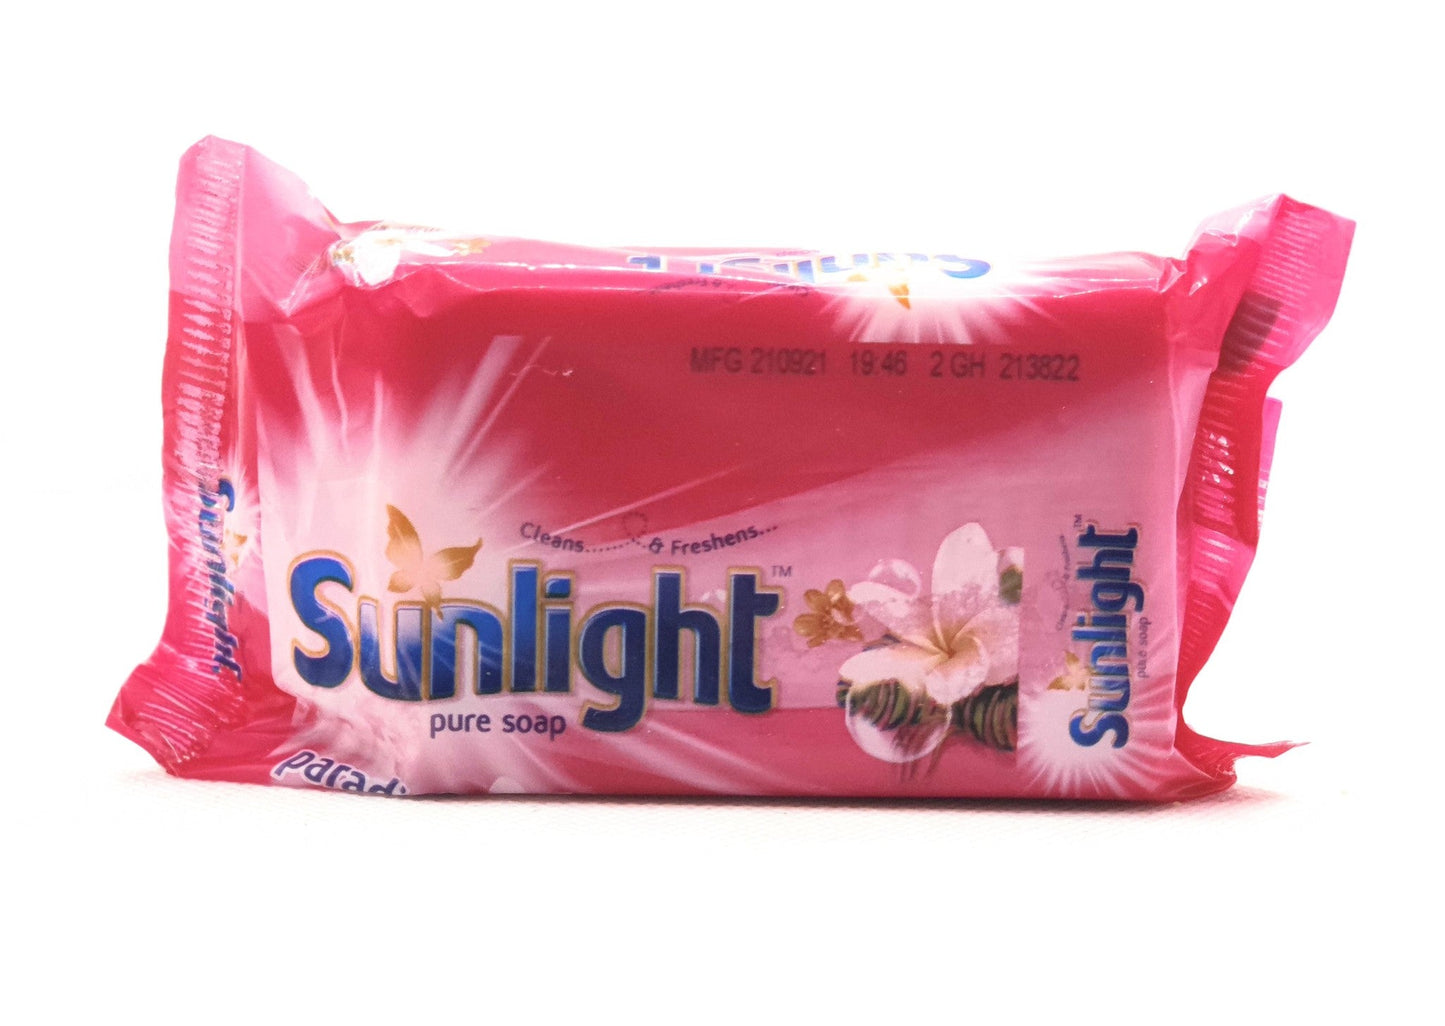 120 gram bar of sunlight tropical pure laundry soap